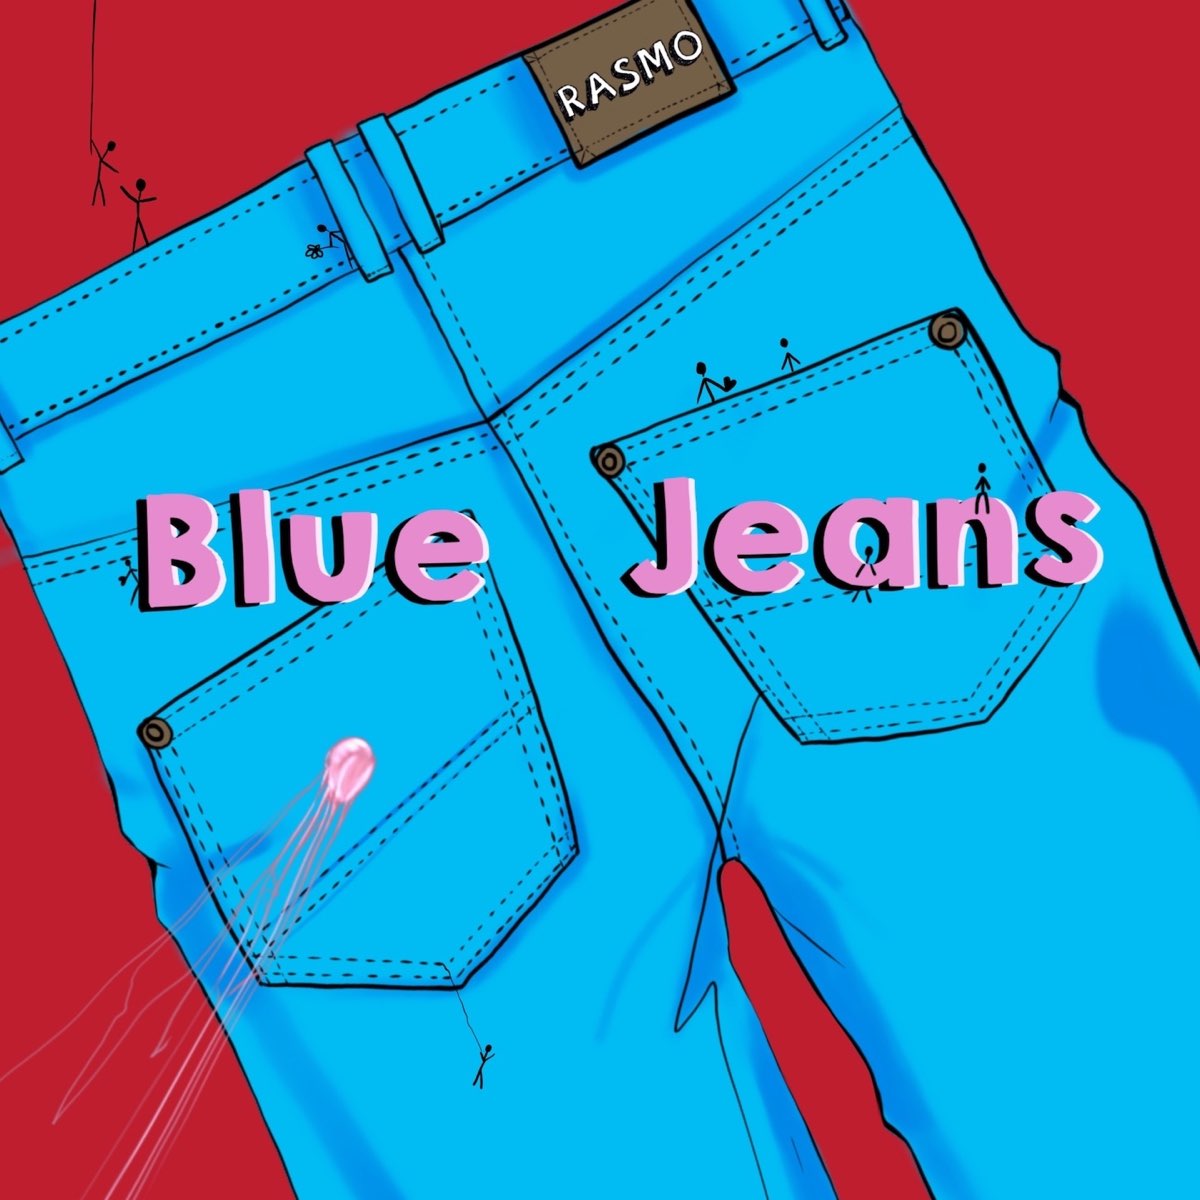 OMG New Jeans album. New Jeans first album Art. New Jeans album scan. New jeans альбом